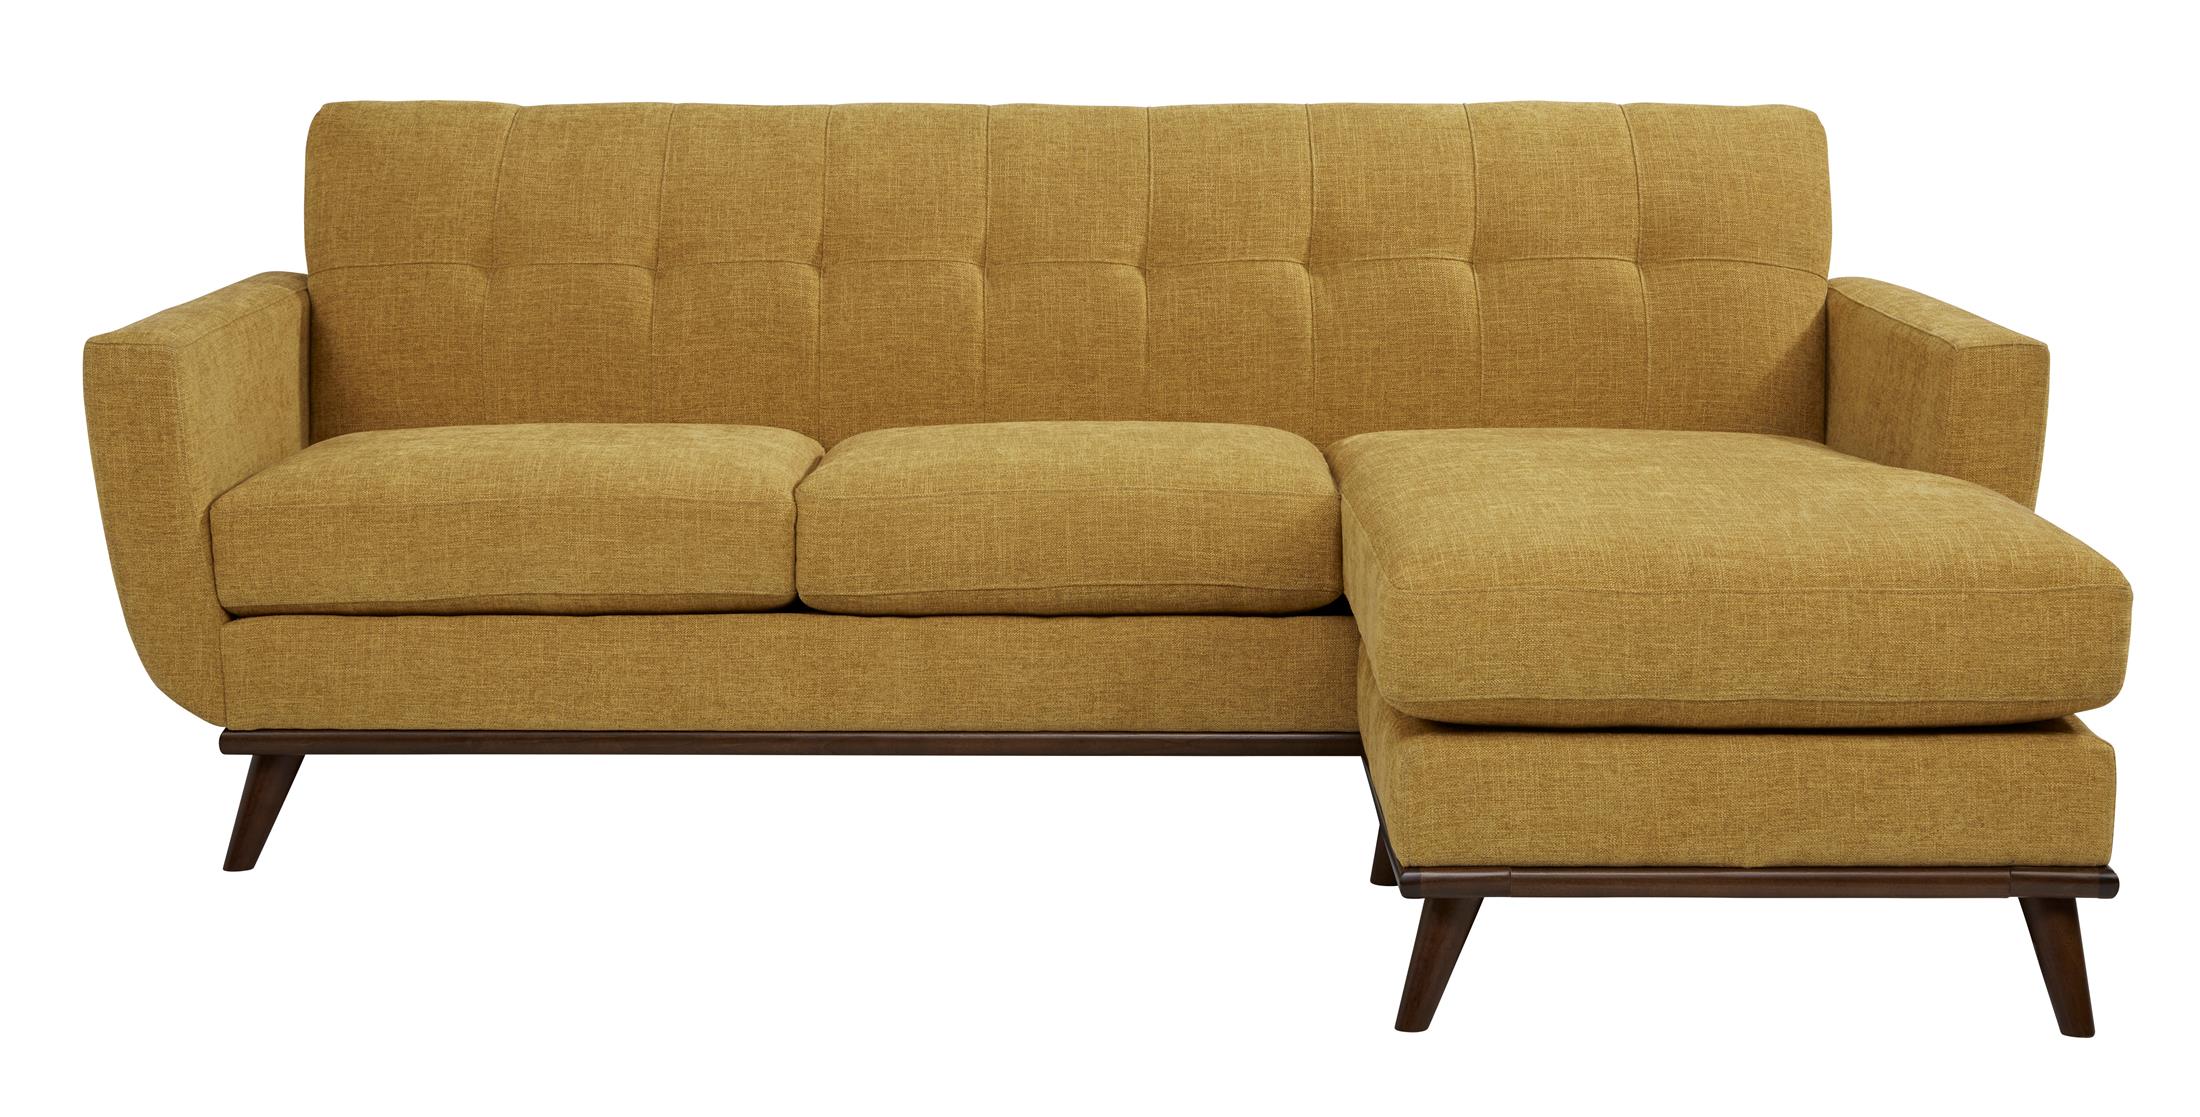 Topaz Gold Sofa Chaise